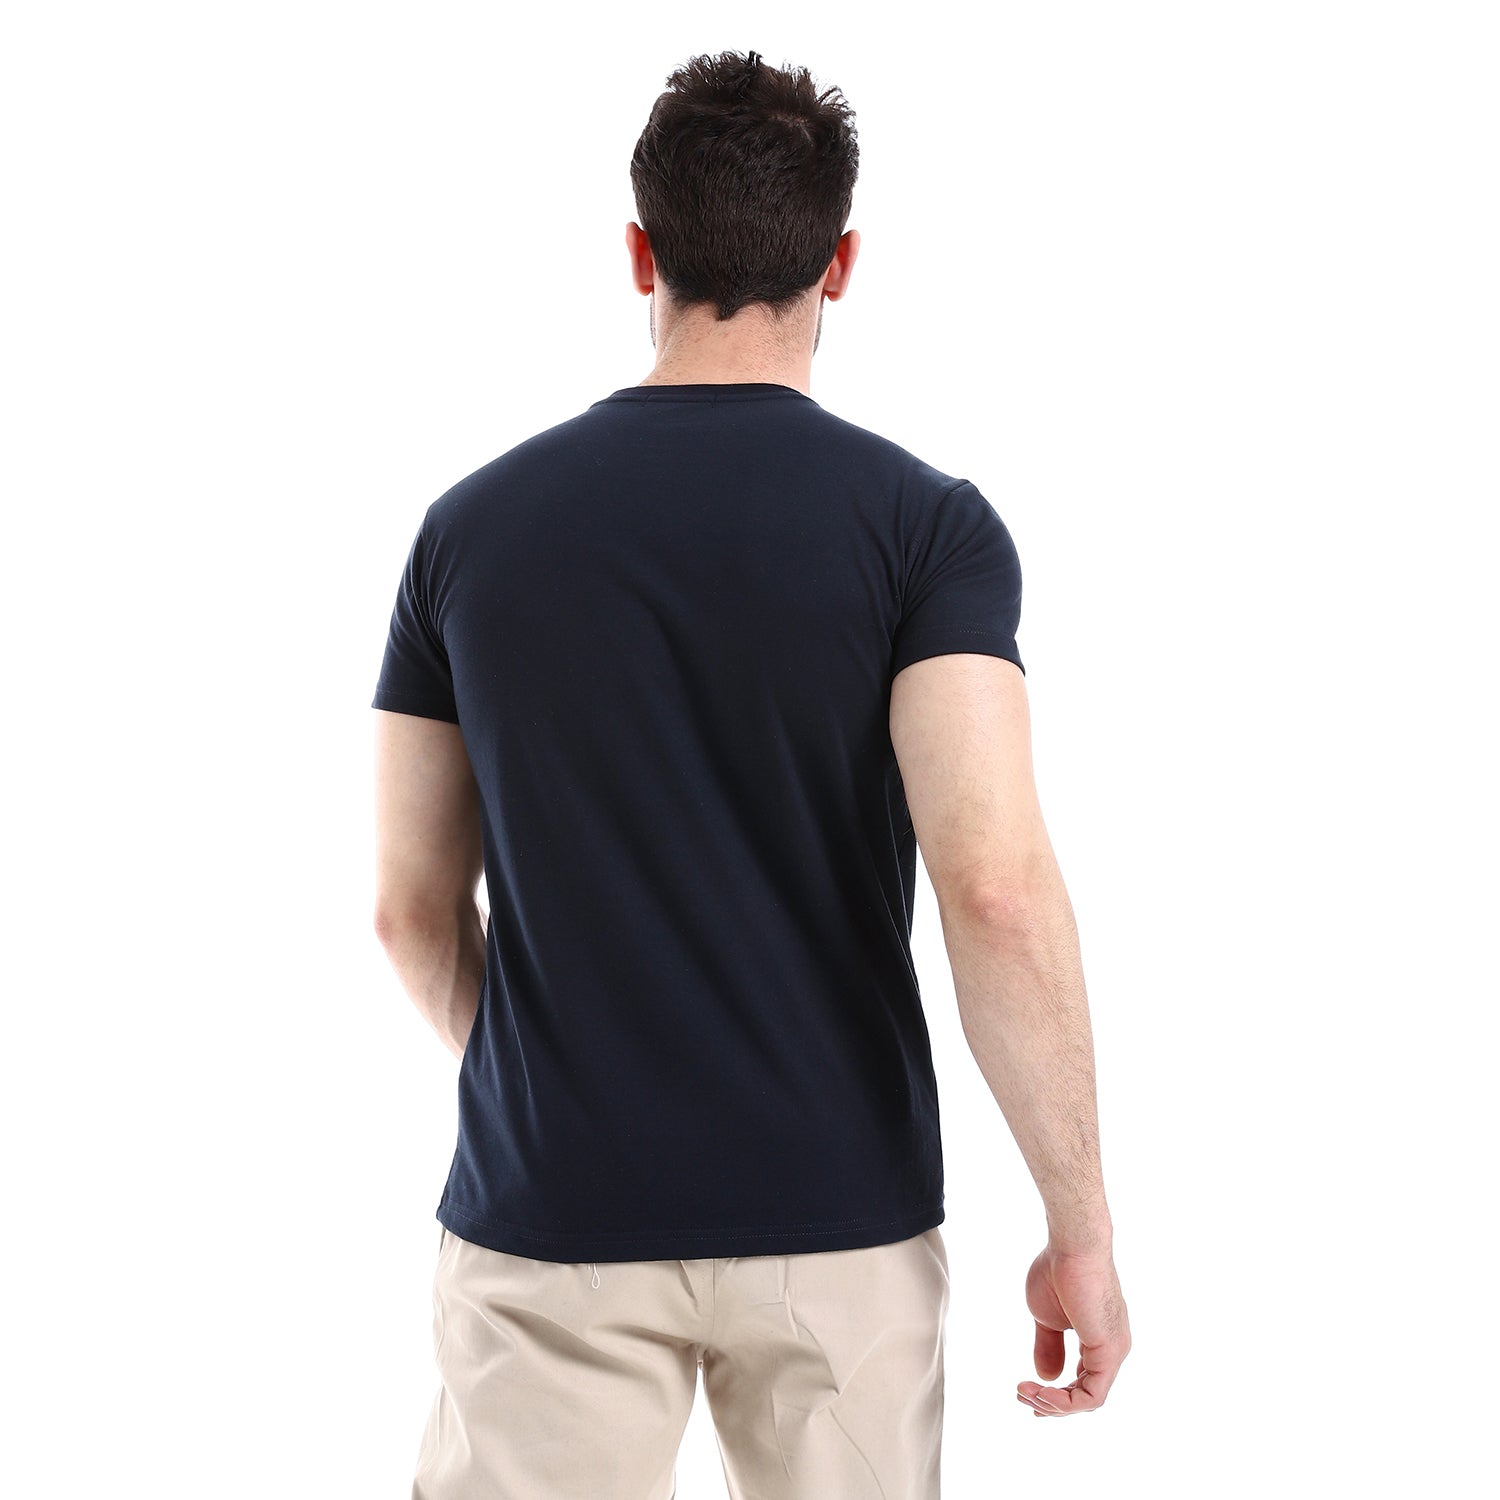 Pavone Printed Short Sleeves Round Neck T-Shirt (8323)